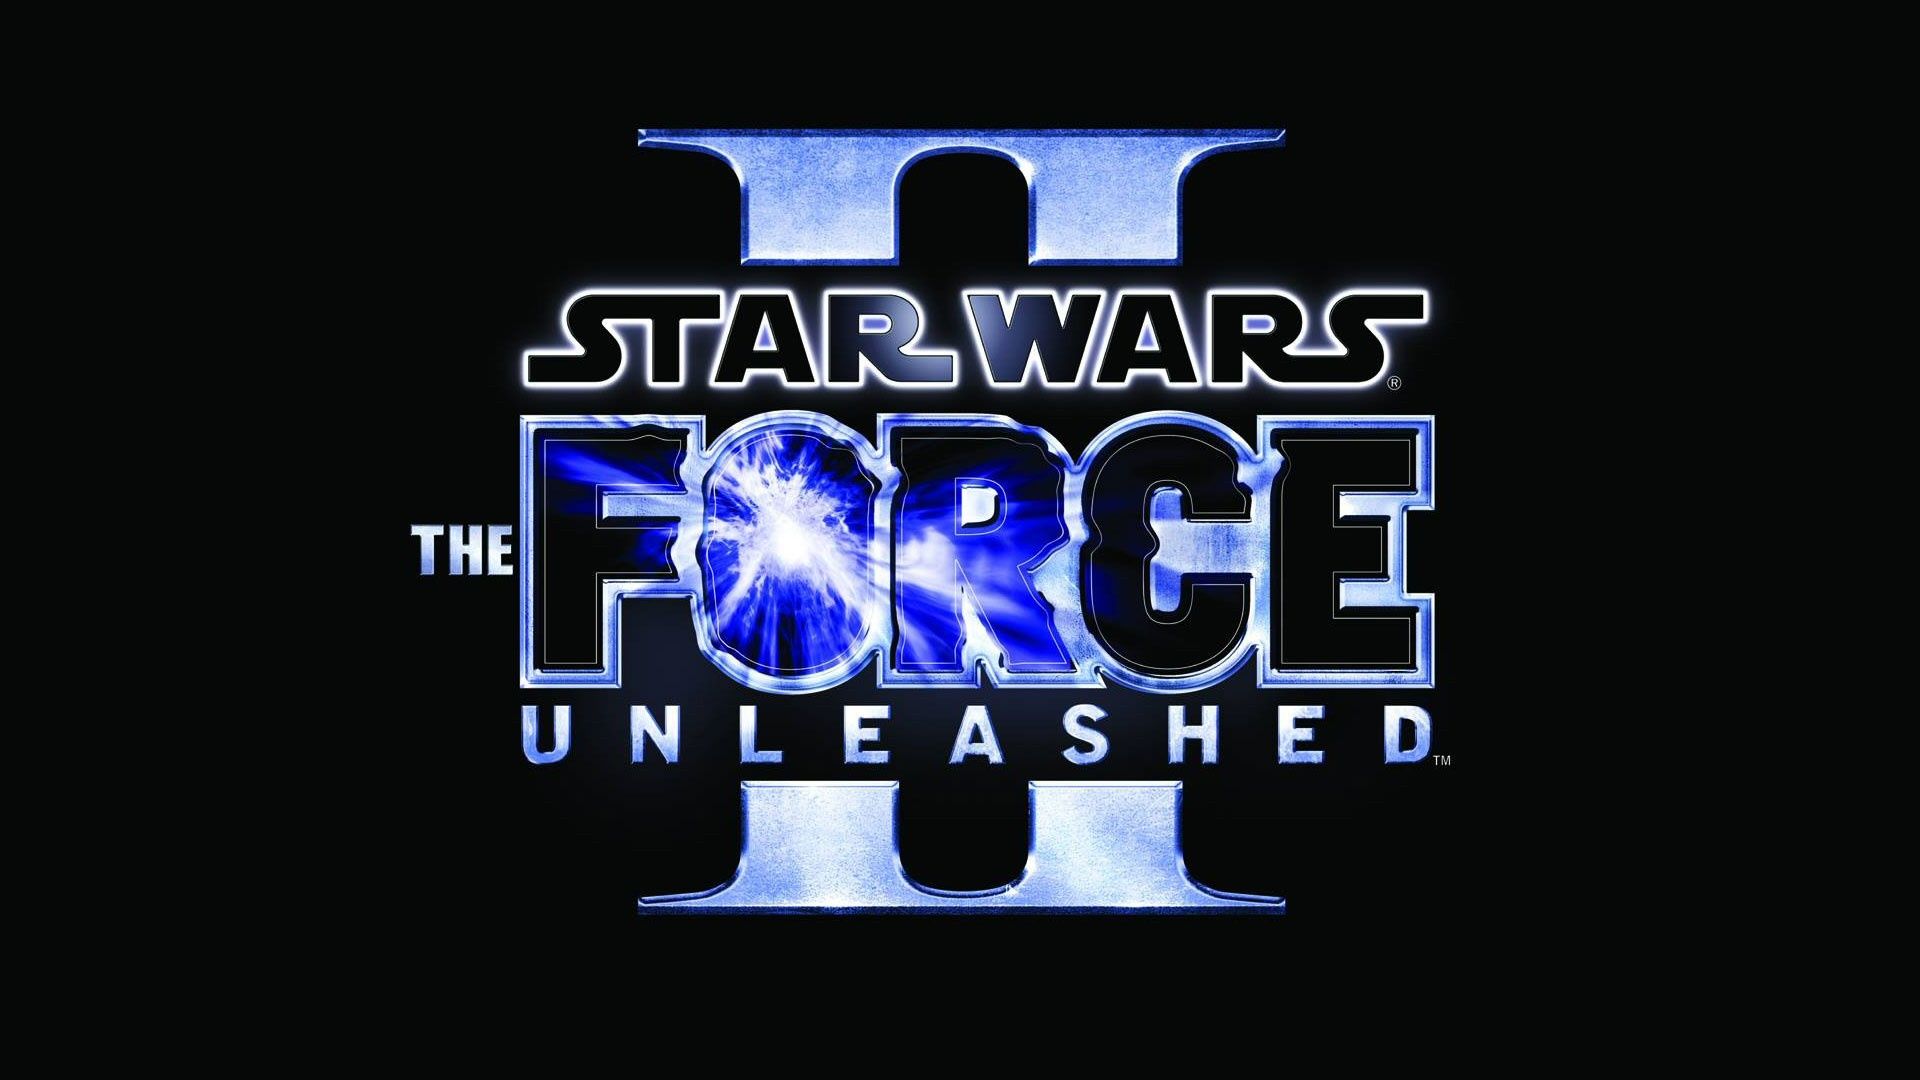 star-wars-the-force-unleashed-ii-poster-1080p-movie-desktop-wallpaper-26810.jpg